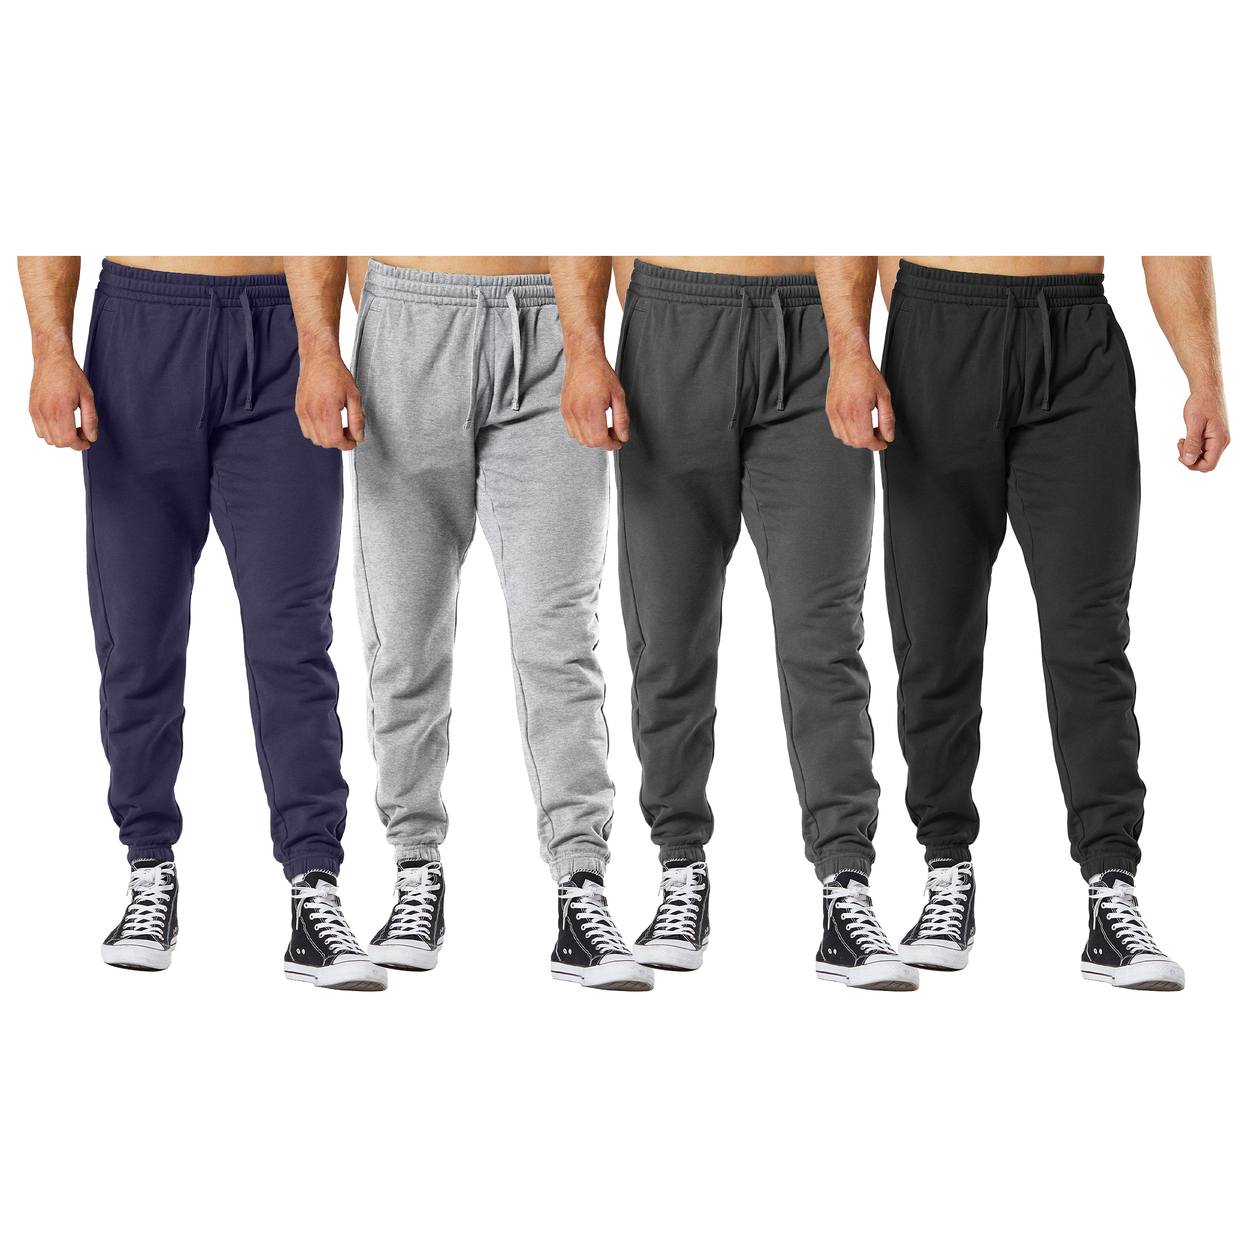 Men's Ultra-Soft Cozy Winter Warm Casual Fleece Lined Sweatpants Jogger - Navy, Large